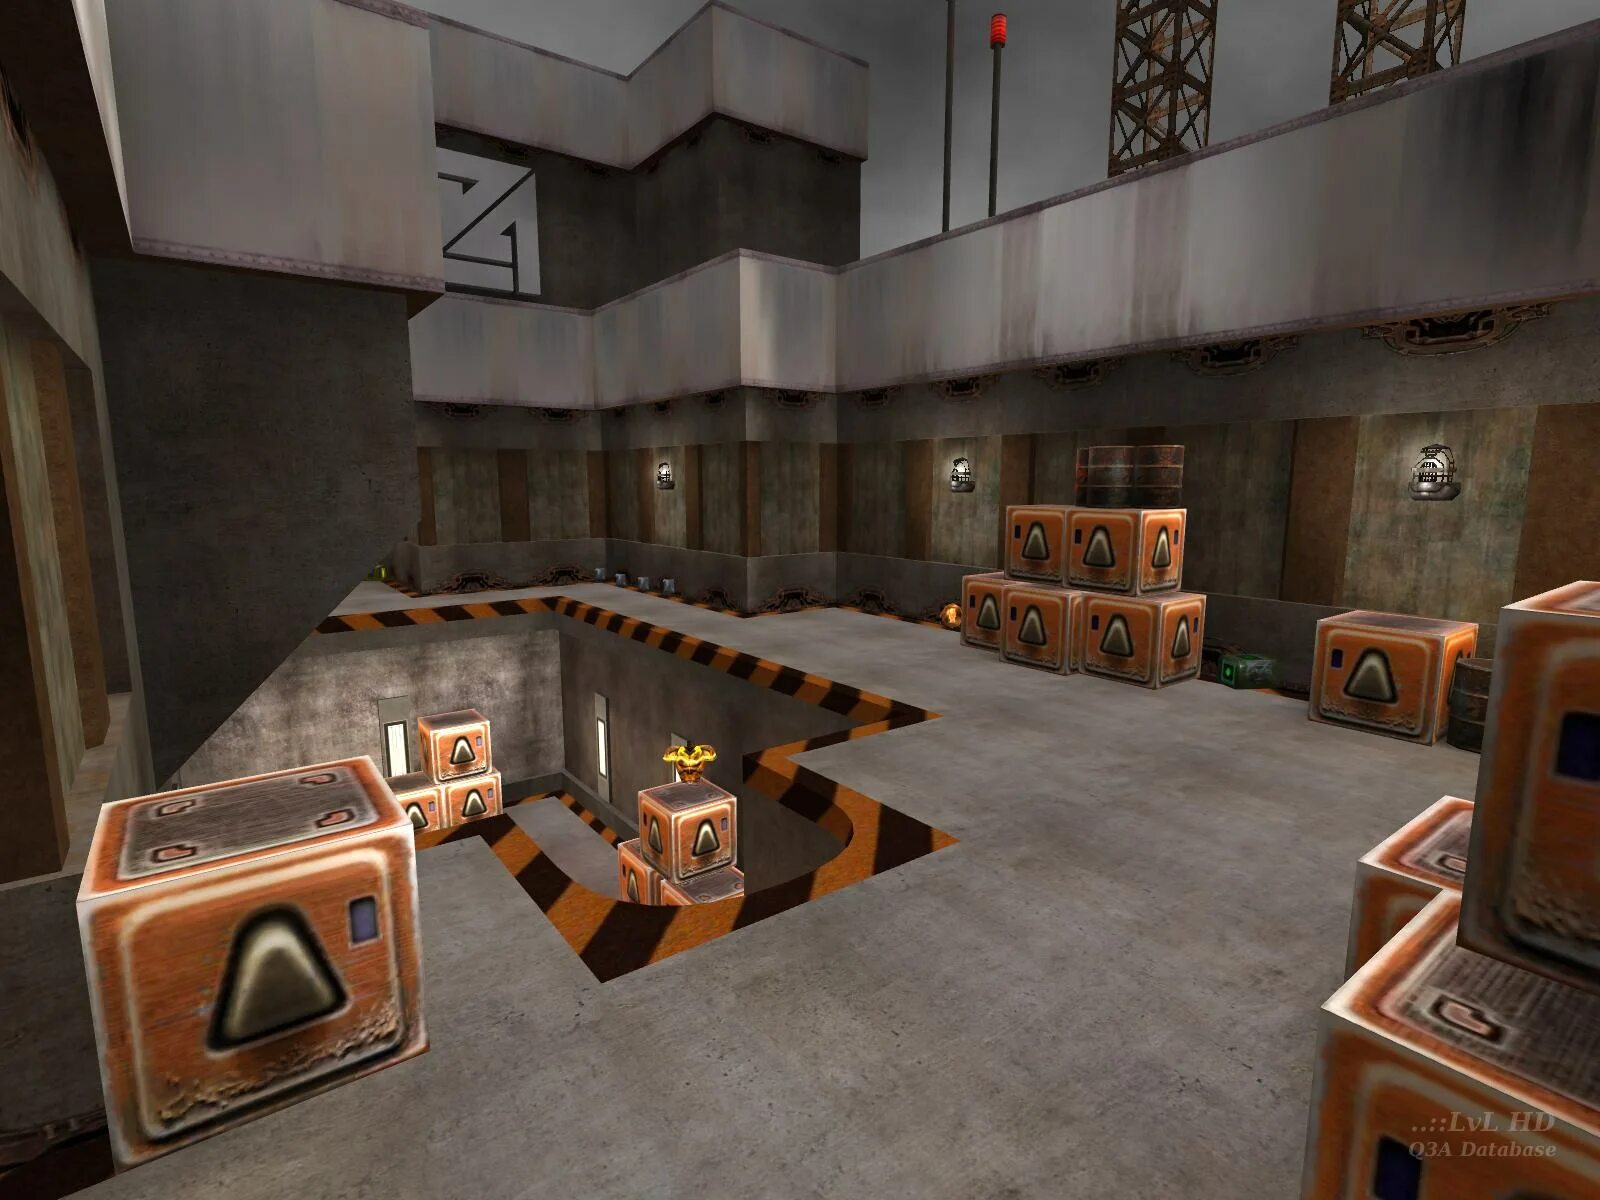 Quake 2 Arena Maps. Бункер карточки. Карта бункера. Бункер все карты. Игра бункер профессии